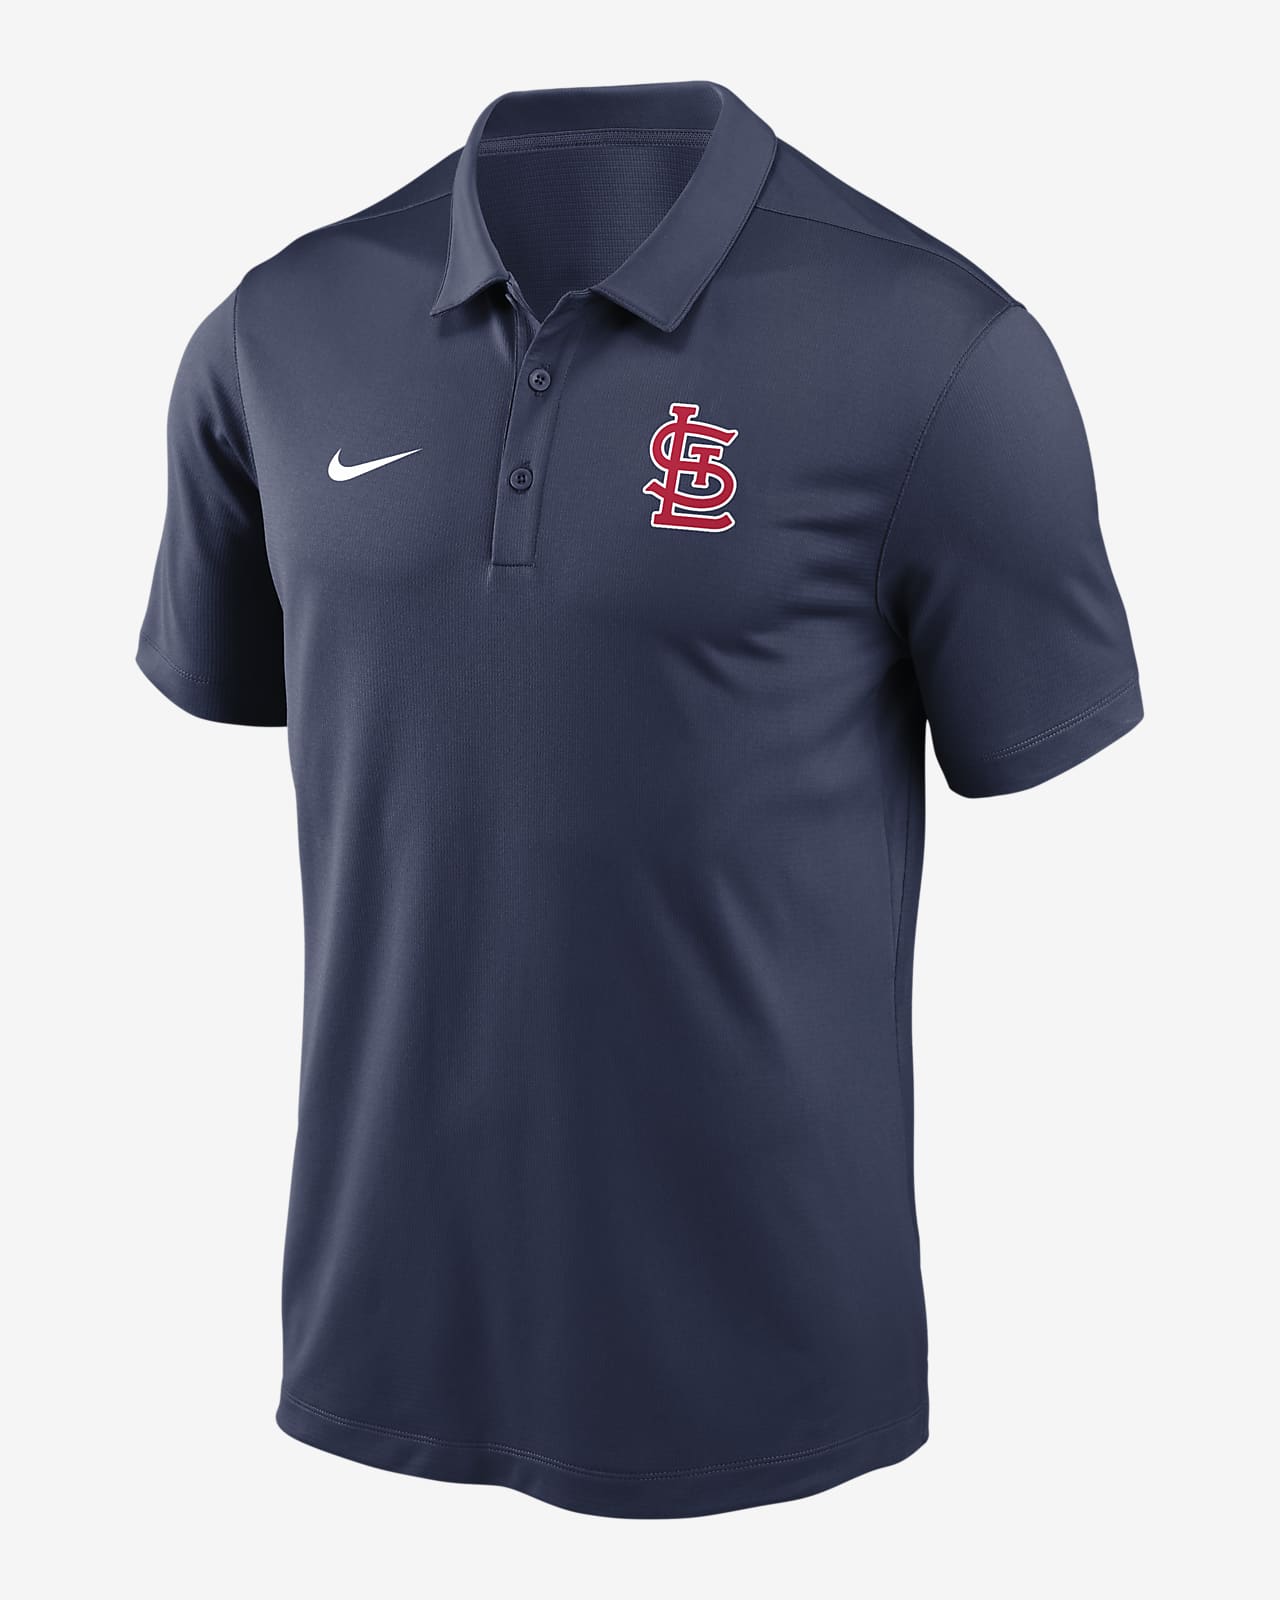 Nike St. Louis Cardinals Dri-fit Golf Polo Shirt Men's Size